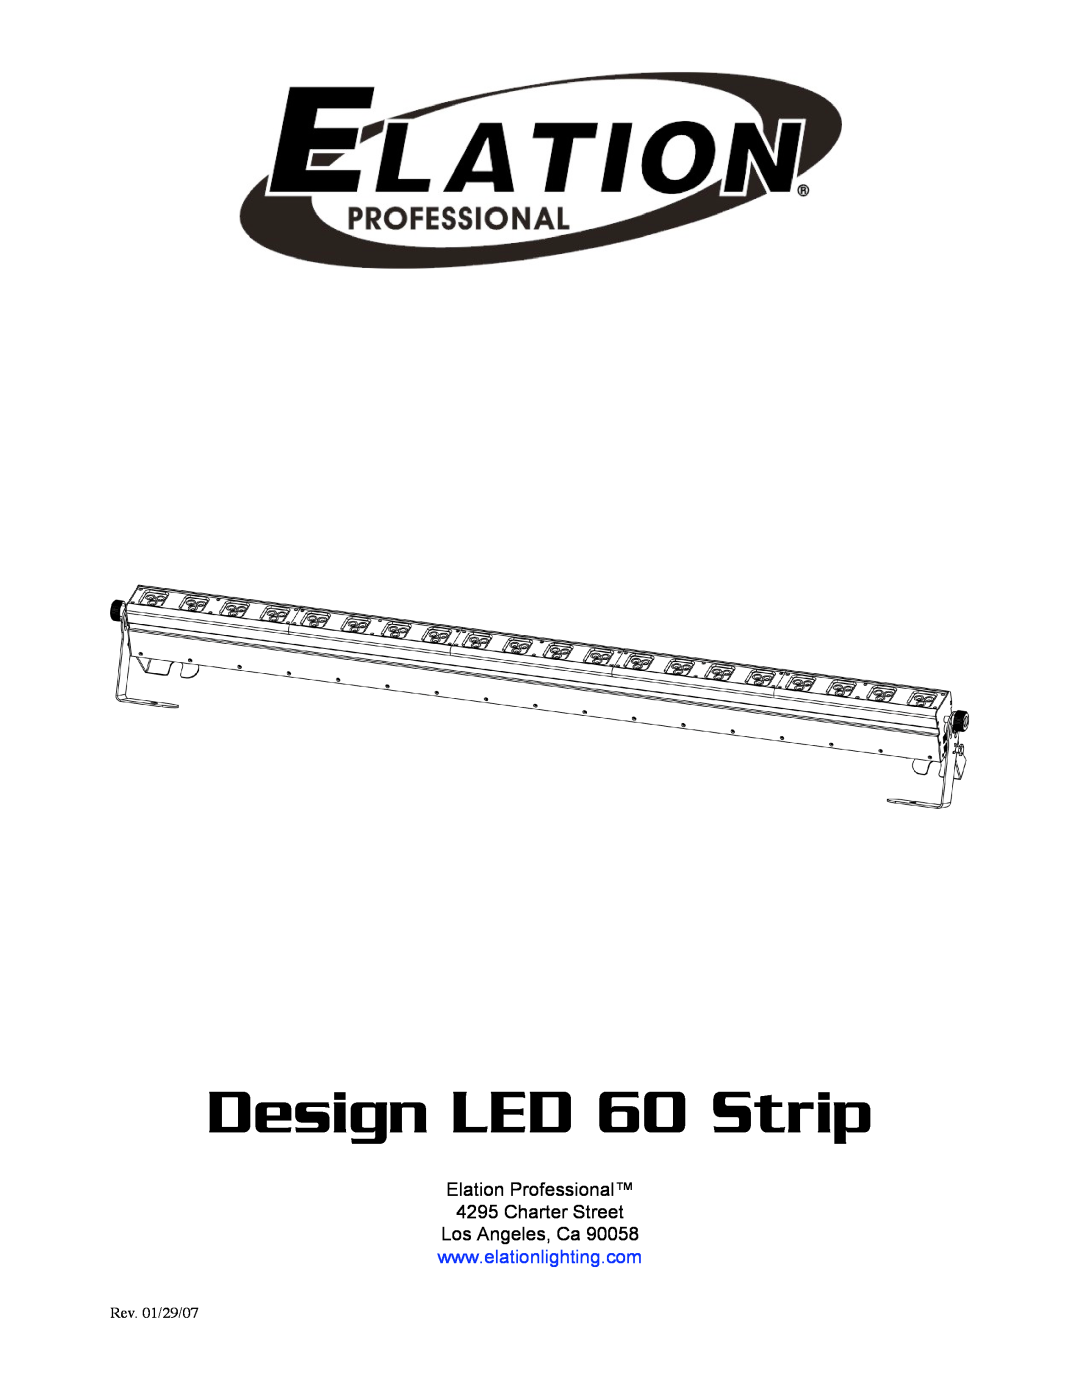 Elation Professional manual Design LED 60 Strip, Elation Professional 4295 Charter Street, Rev. 01/29/07 